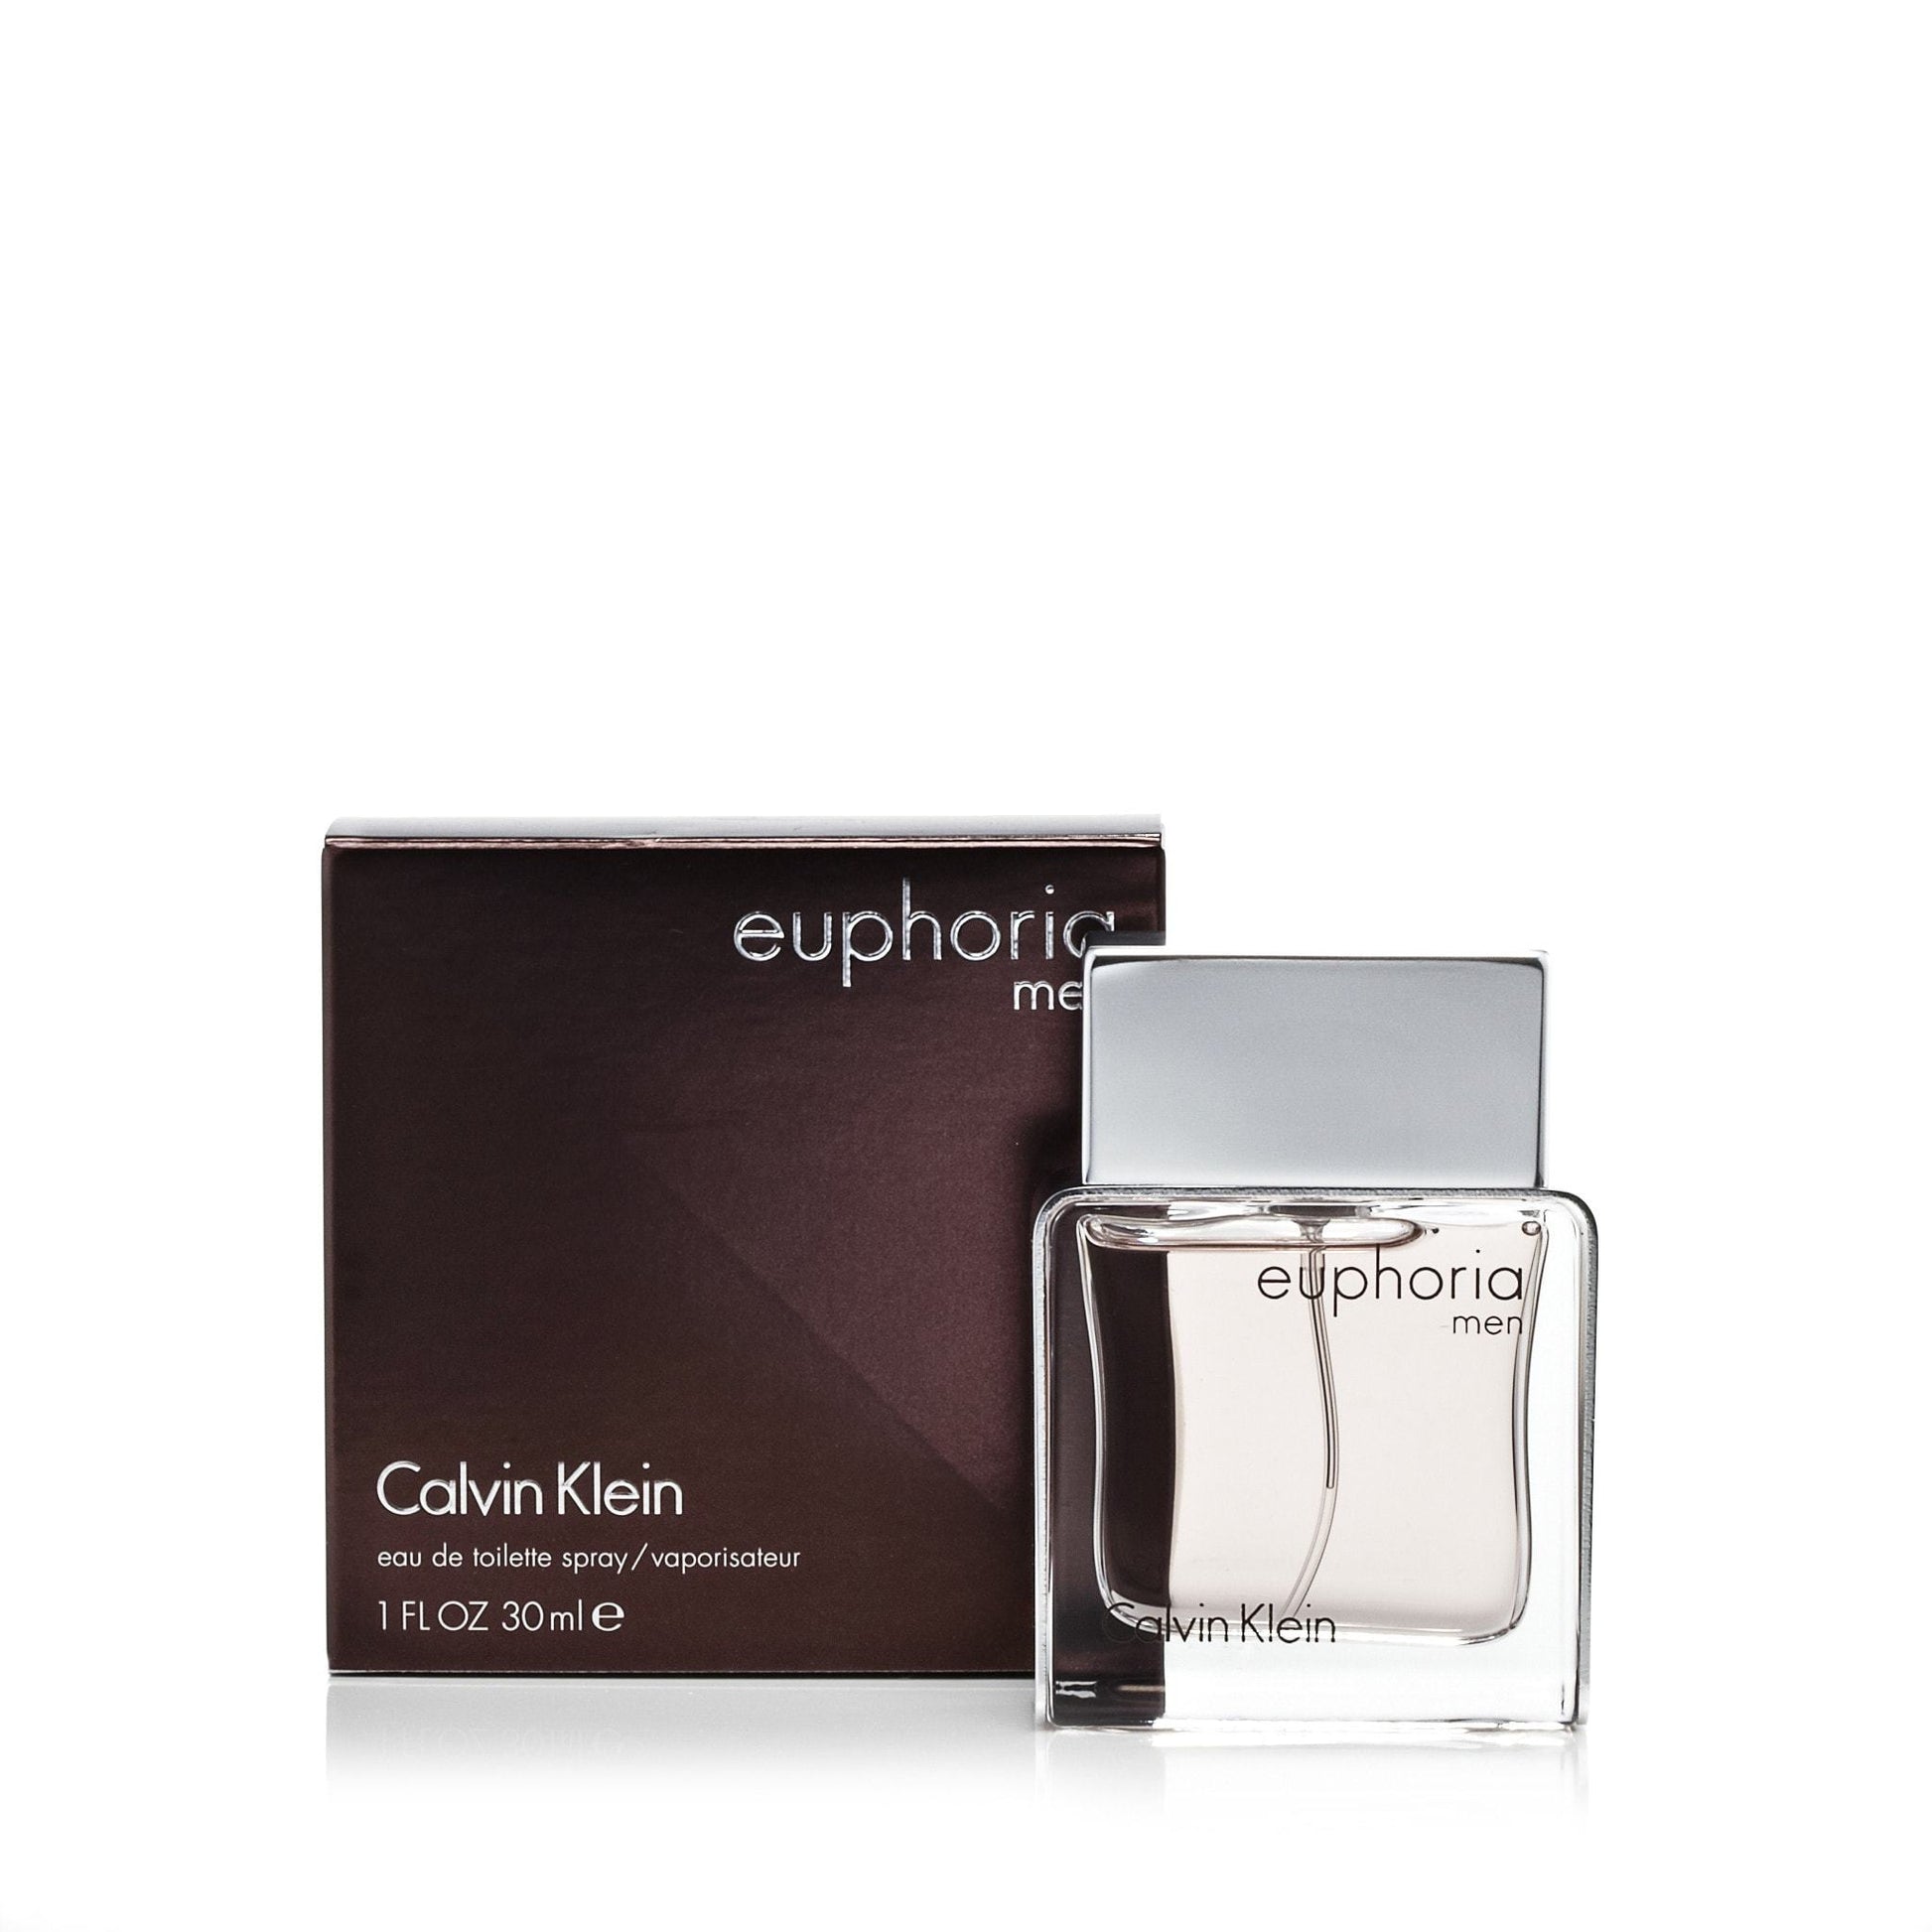 Euphoria Eau de Toilette Spray for Men by Calvin Klein, Product image 1